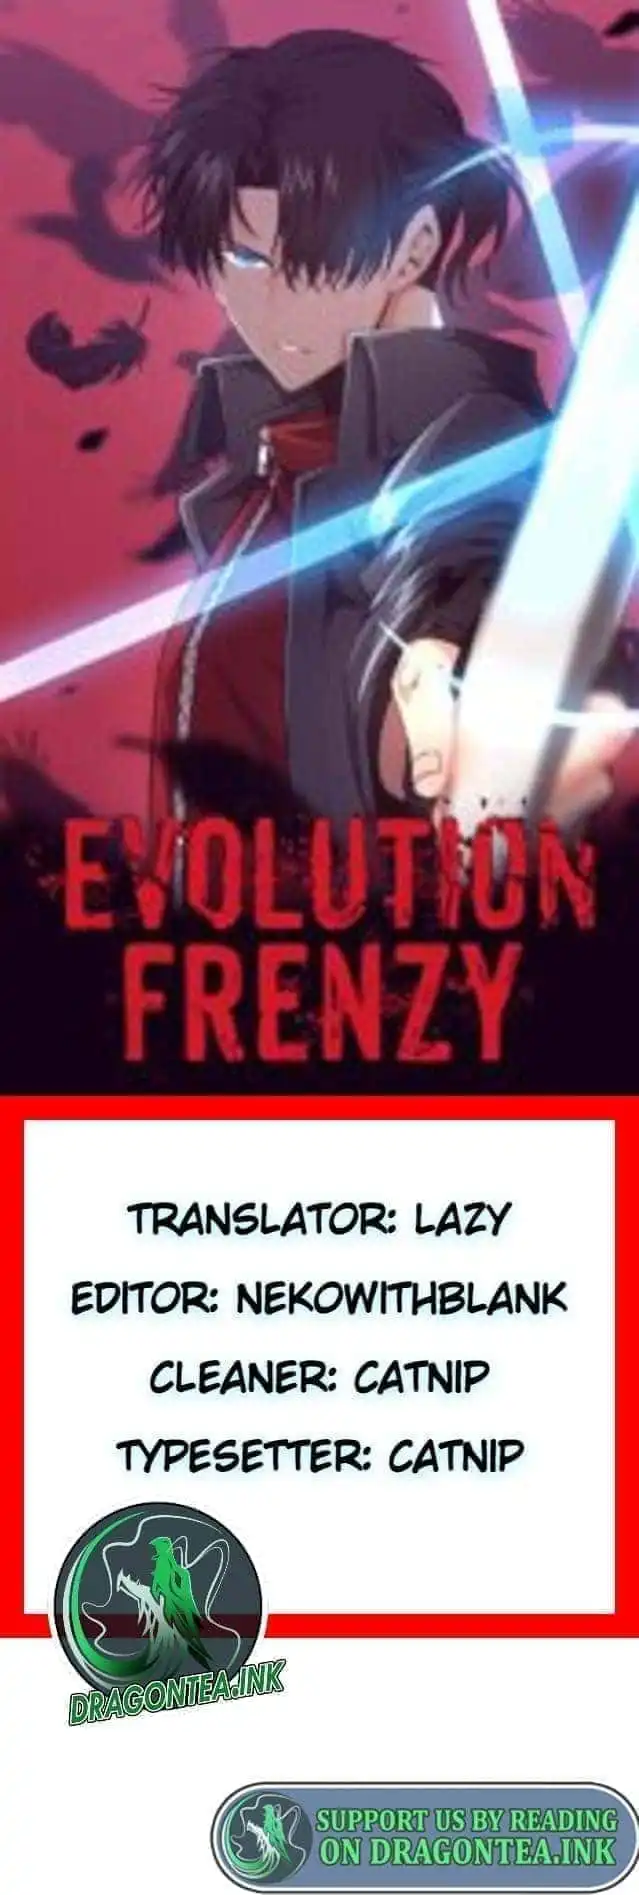 Evolution frenzy Chapter 62